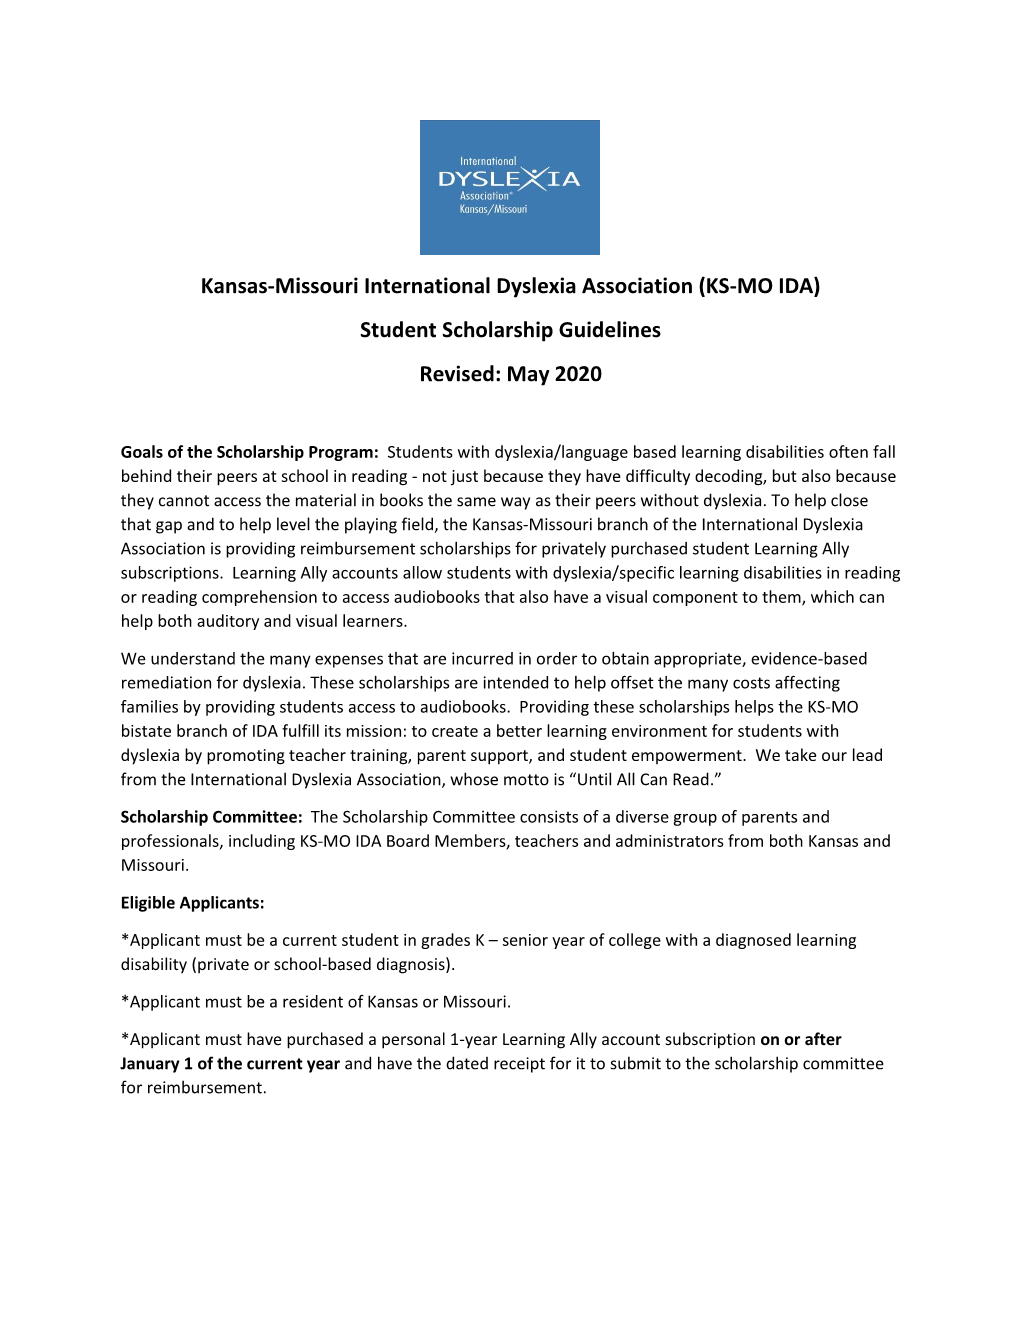 Kansas-Missouri International Dyslexia Association (KS-MO IDA) Student Scholarship Guidelines Revised: May 2020